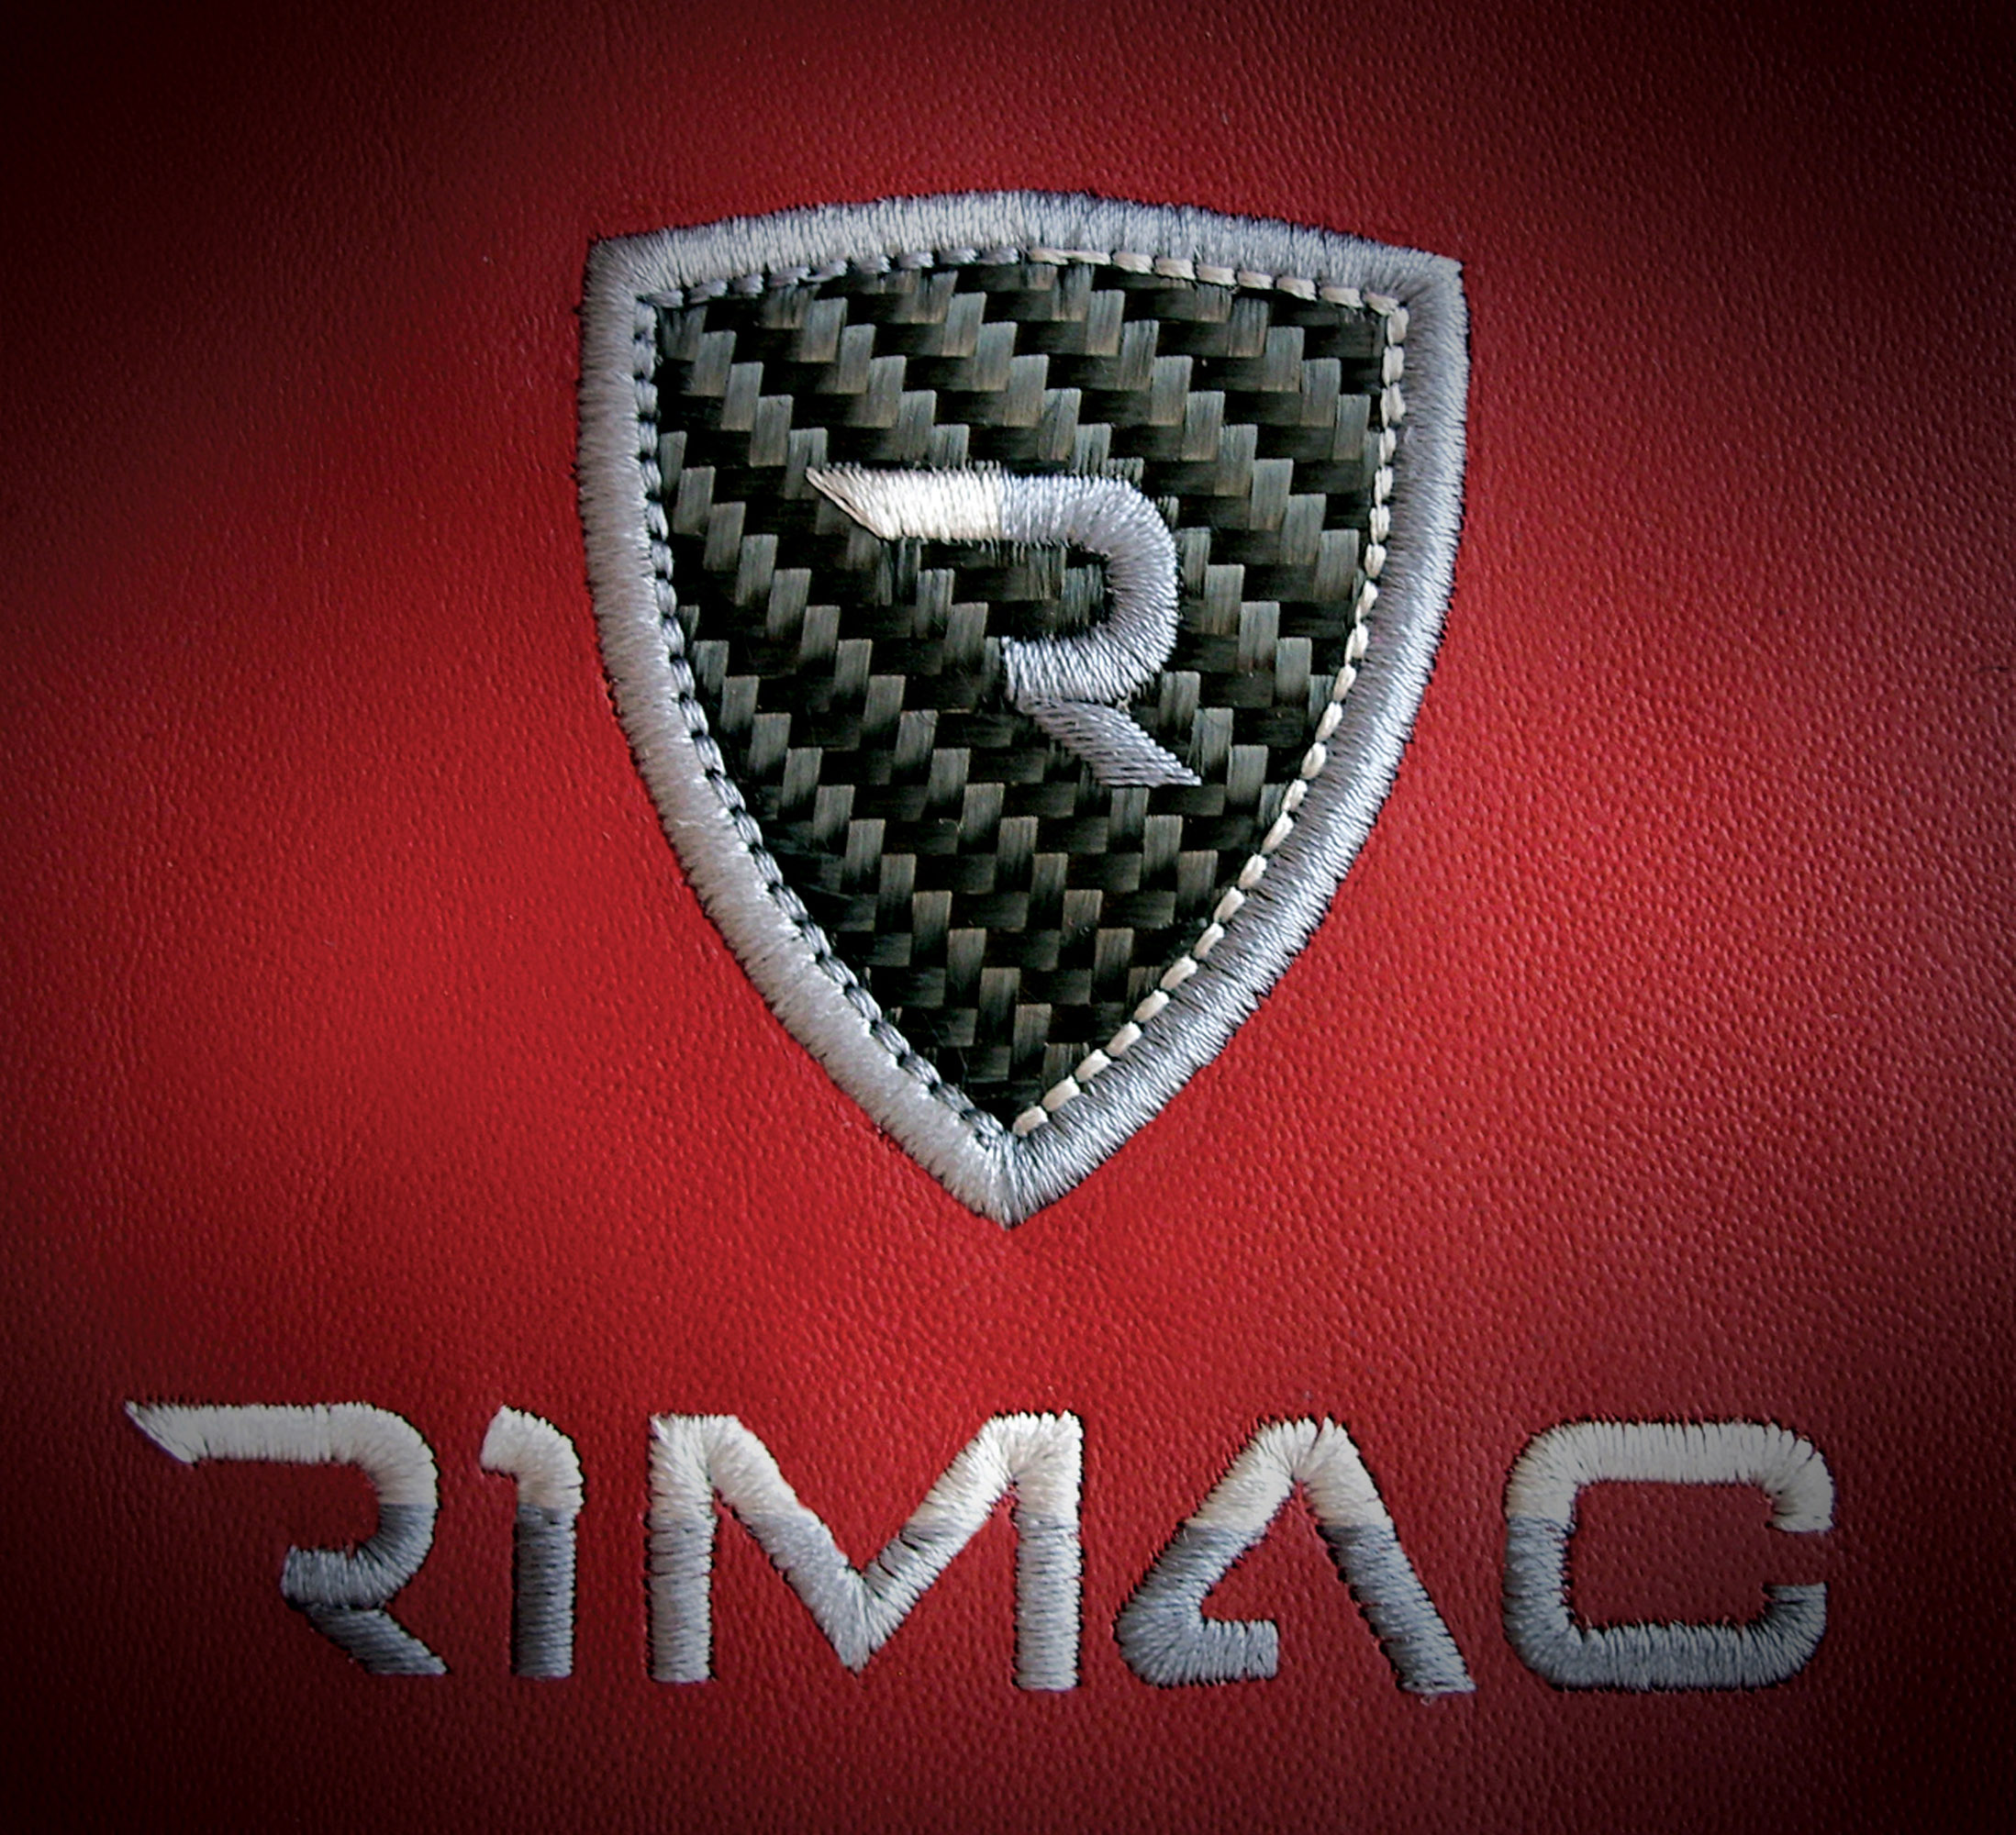 Rimac Concept One Picture